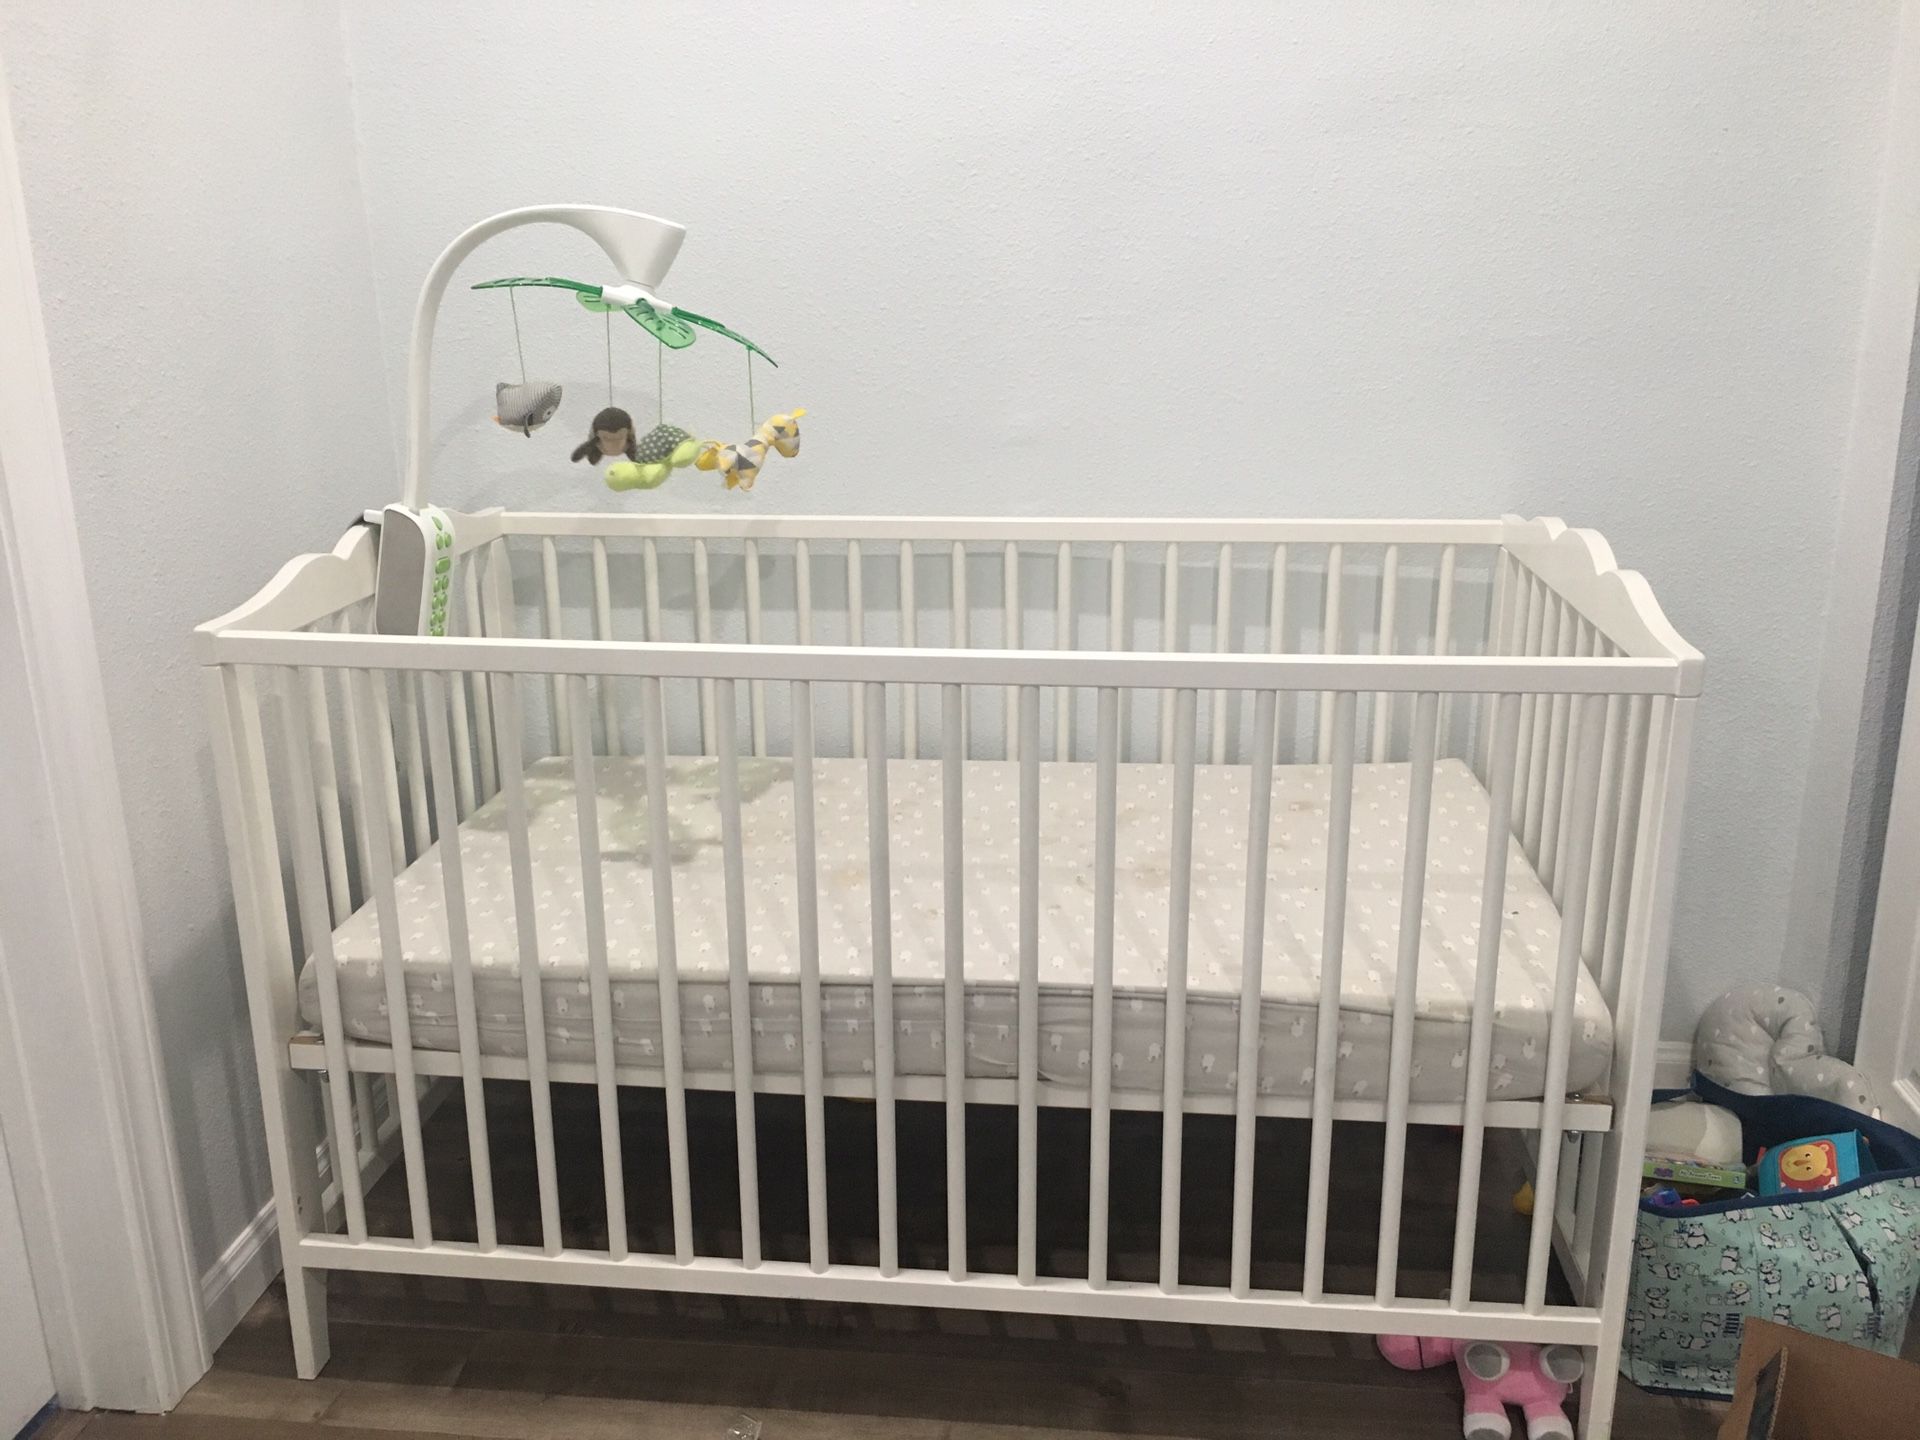 IKEA crib for baby